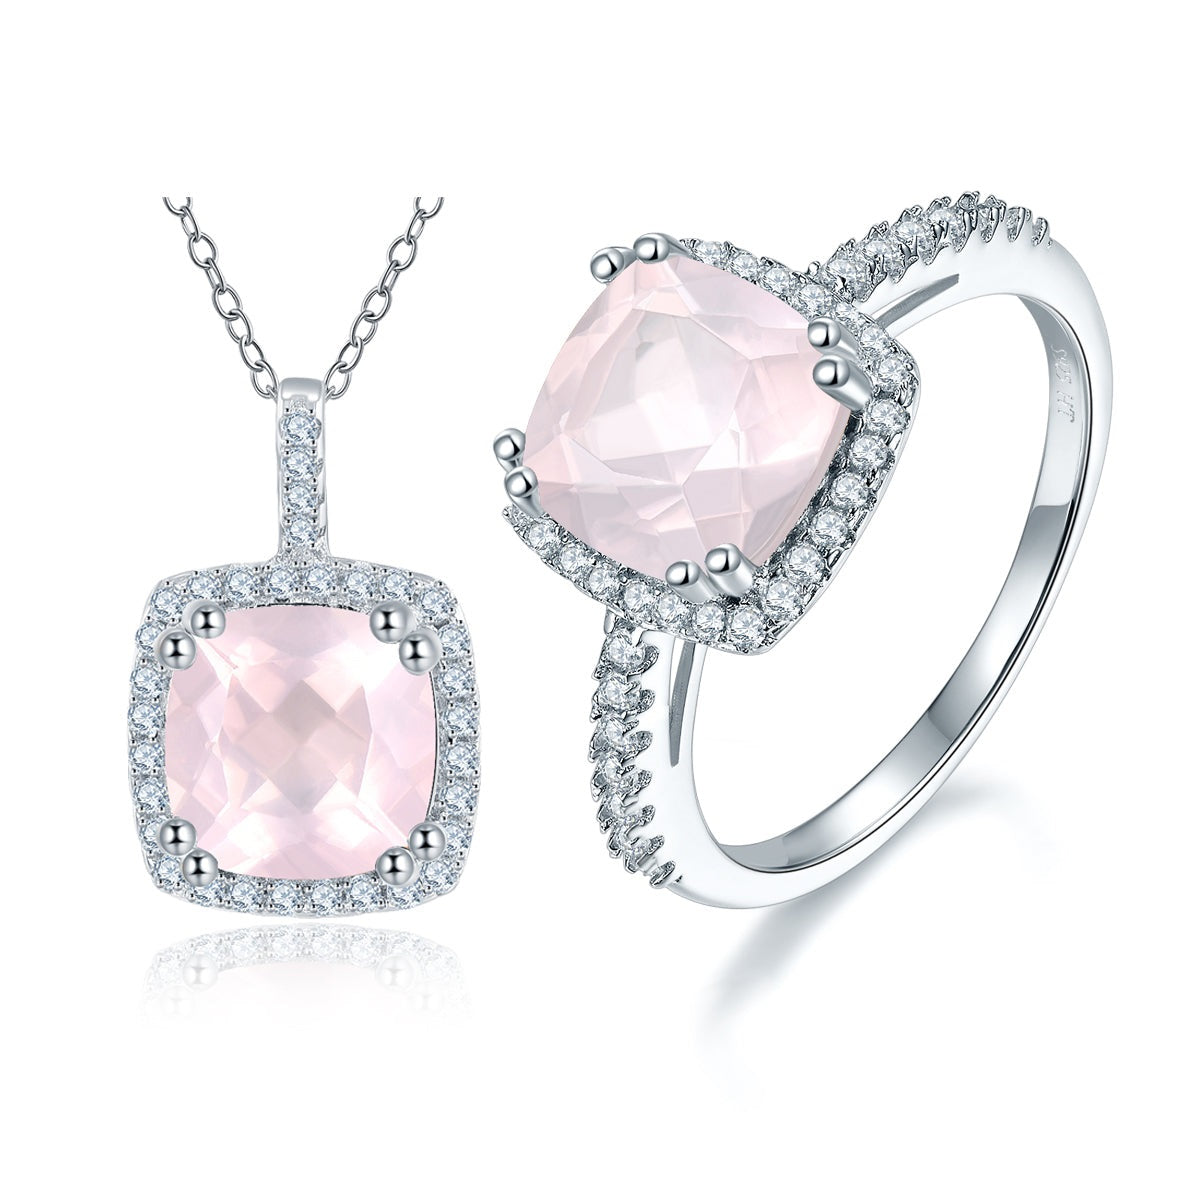 Natural Rose Quartz Sterling Silver Romantic Elegant Design Women Jewelry Set Gifts